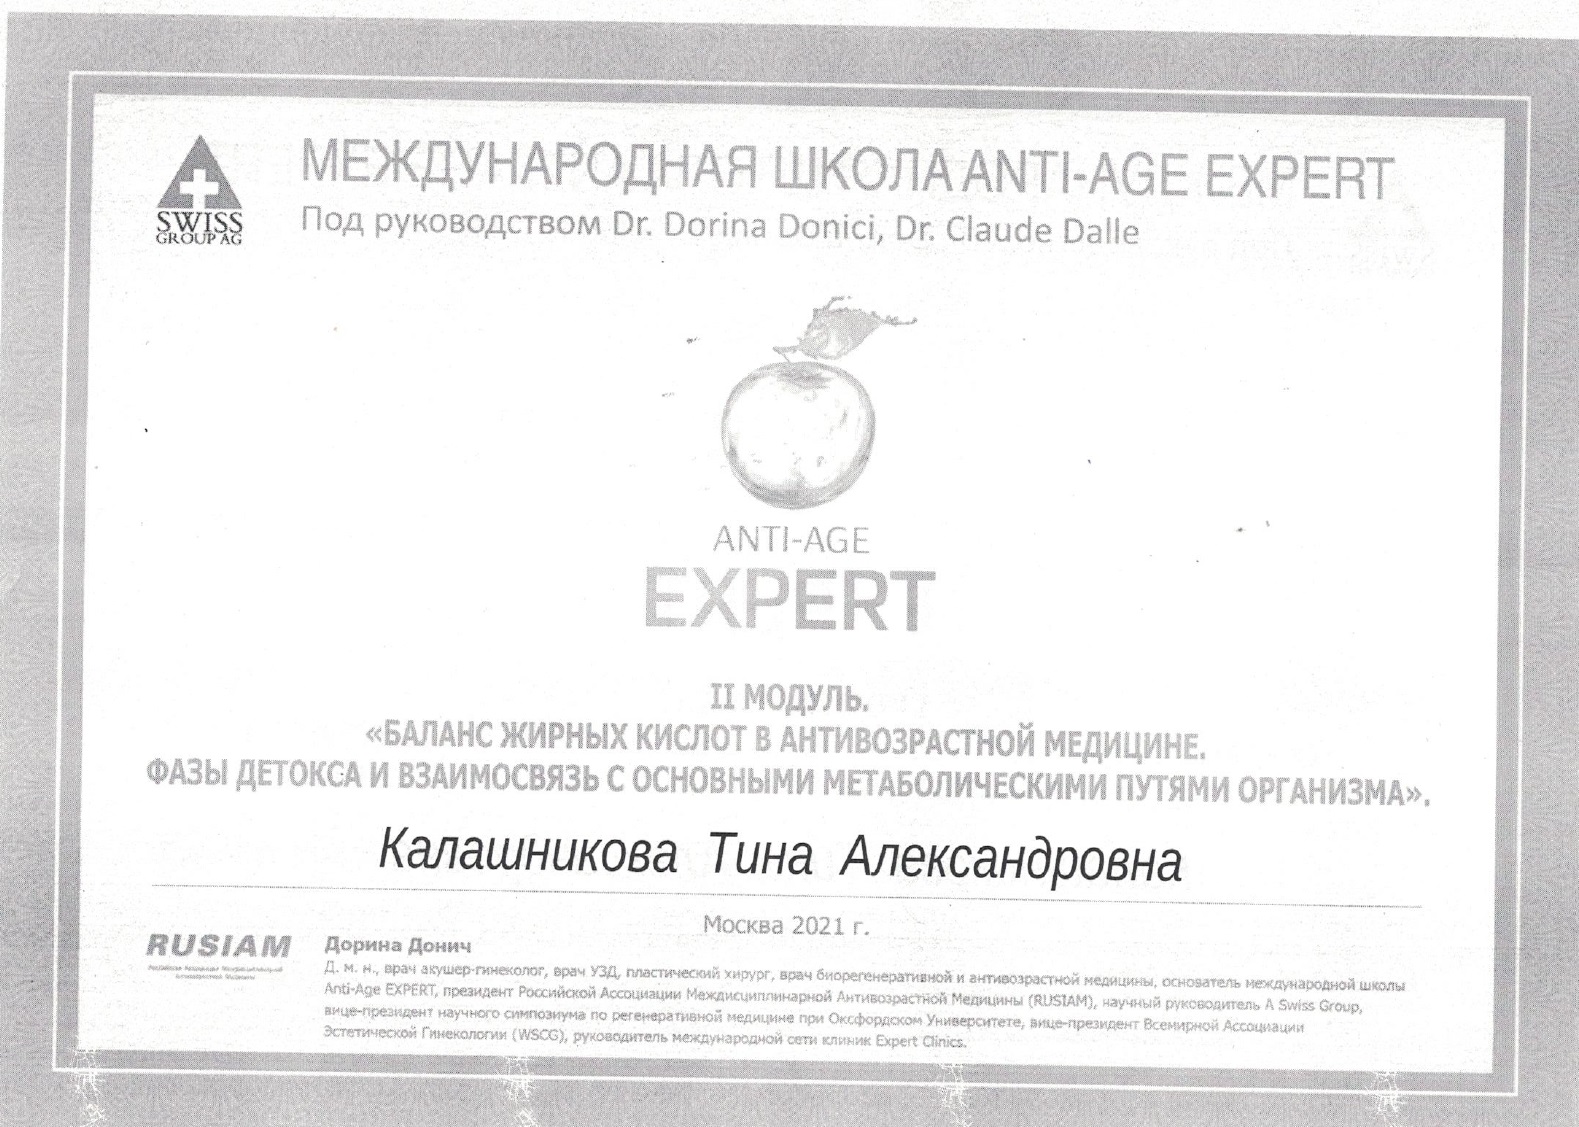 Скан сертификата anti-age expert, модуль 2, Калашникова Т. А.